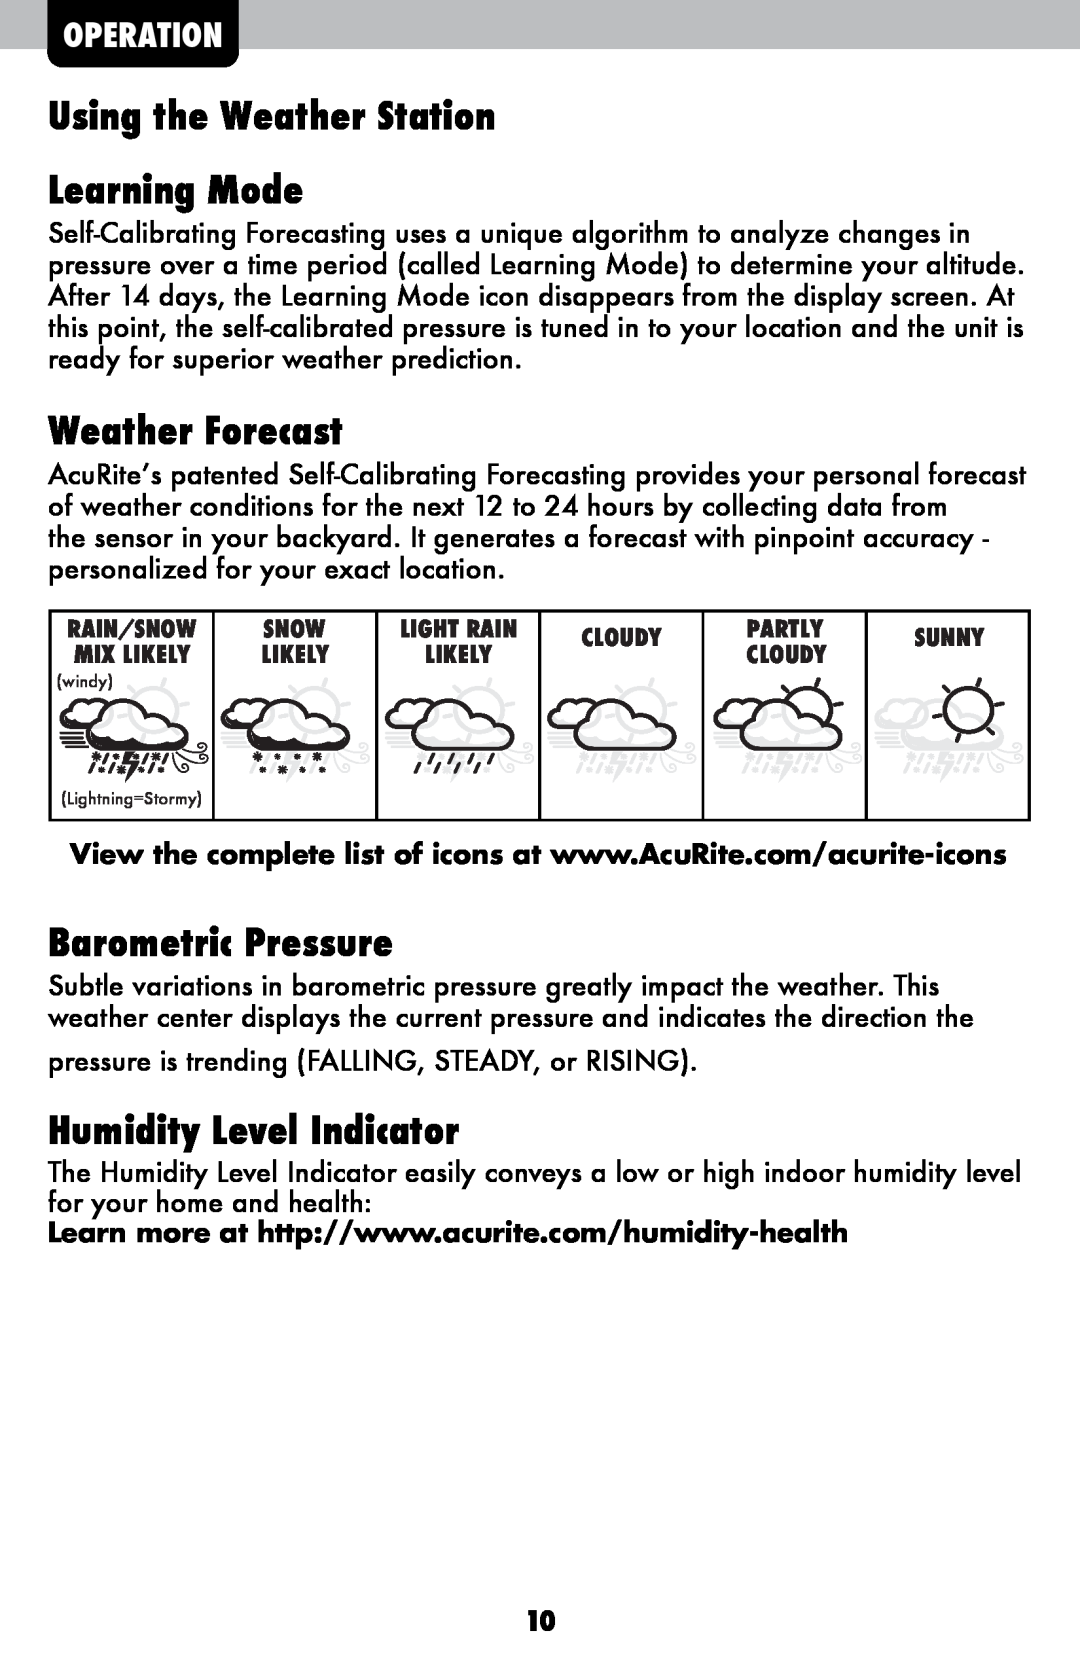 Acu-Rite 2048 Using the Weather Station Learning Mode, Weather Forecast, Barometric Pressure, Humidity Level Indicator 